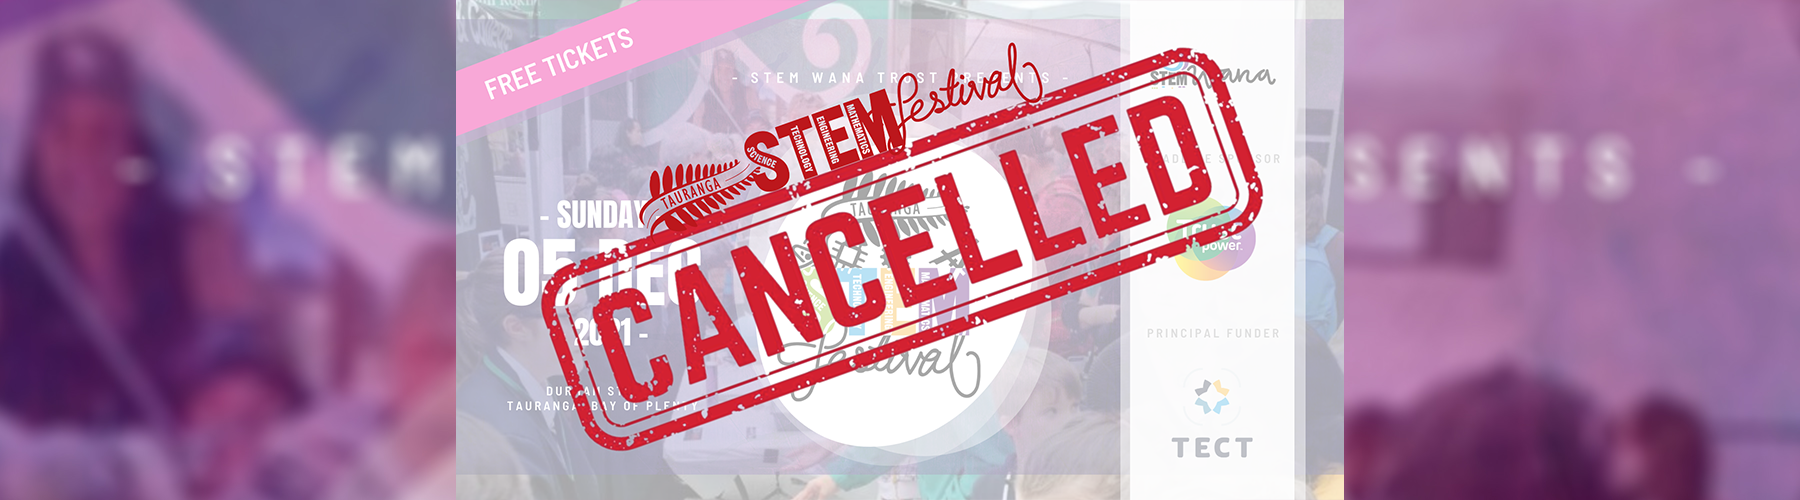 STEM festival cancelled banner